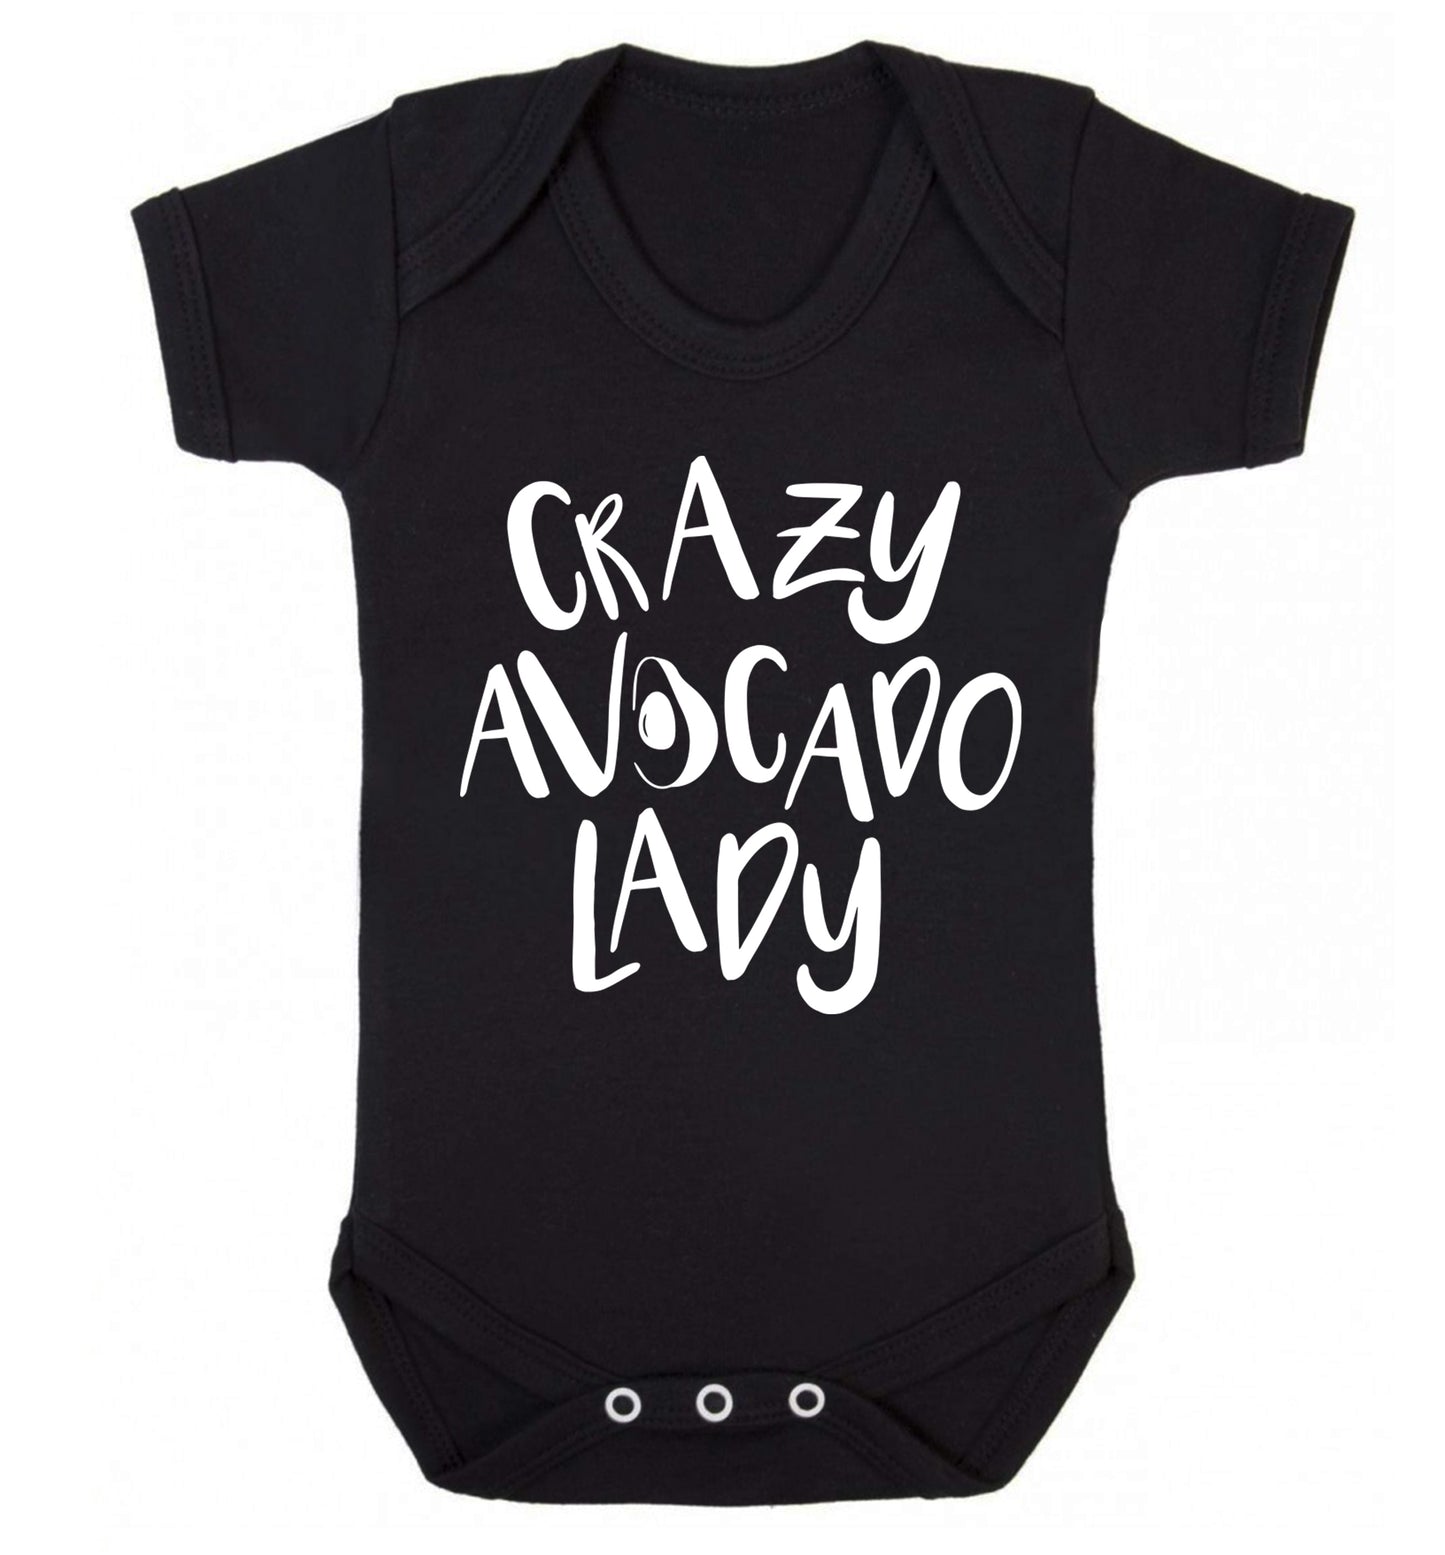 Crazy avocado lady Baby Vest black 18-24 months